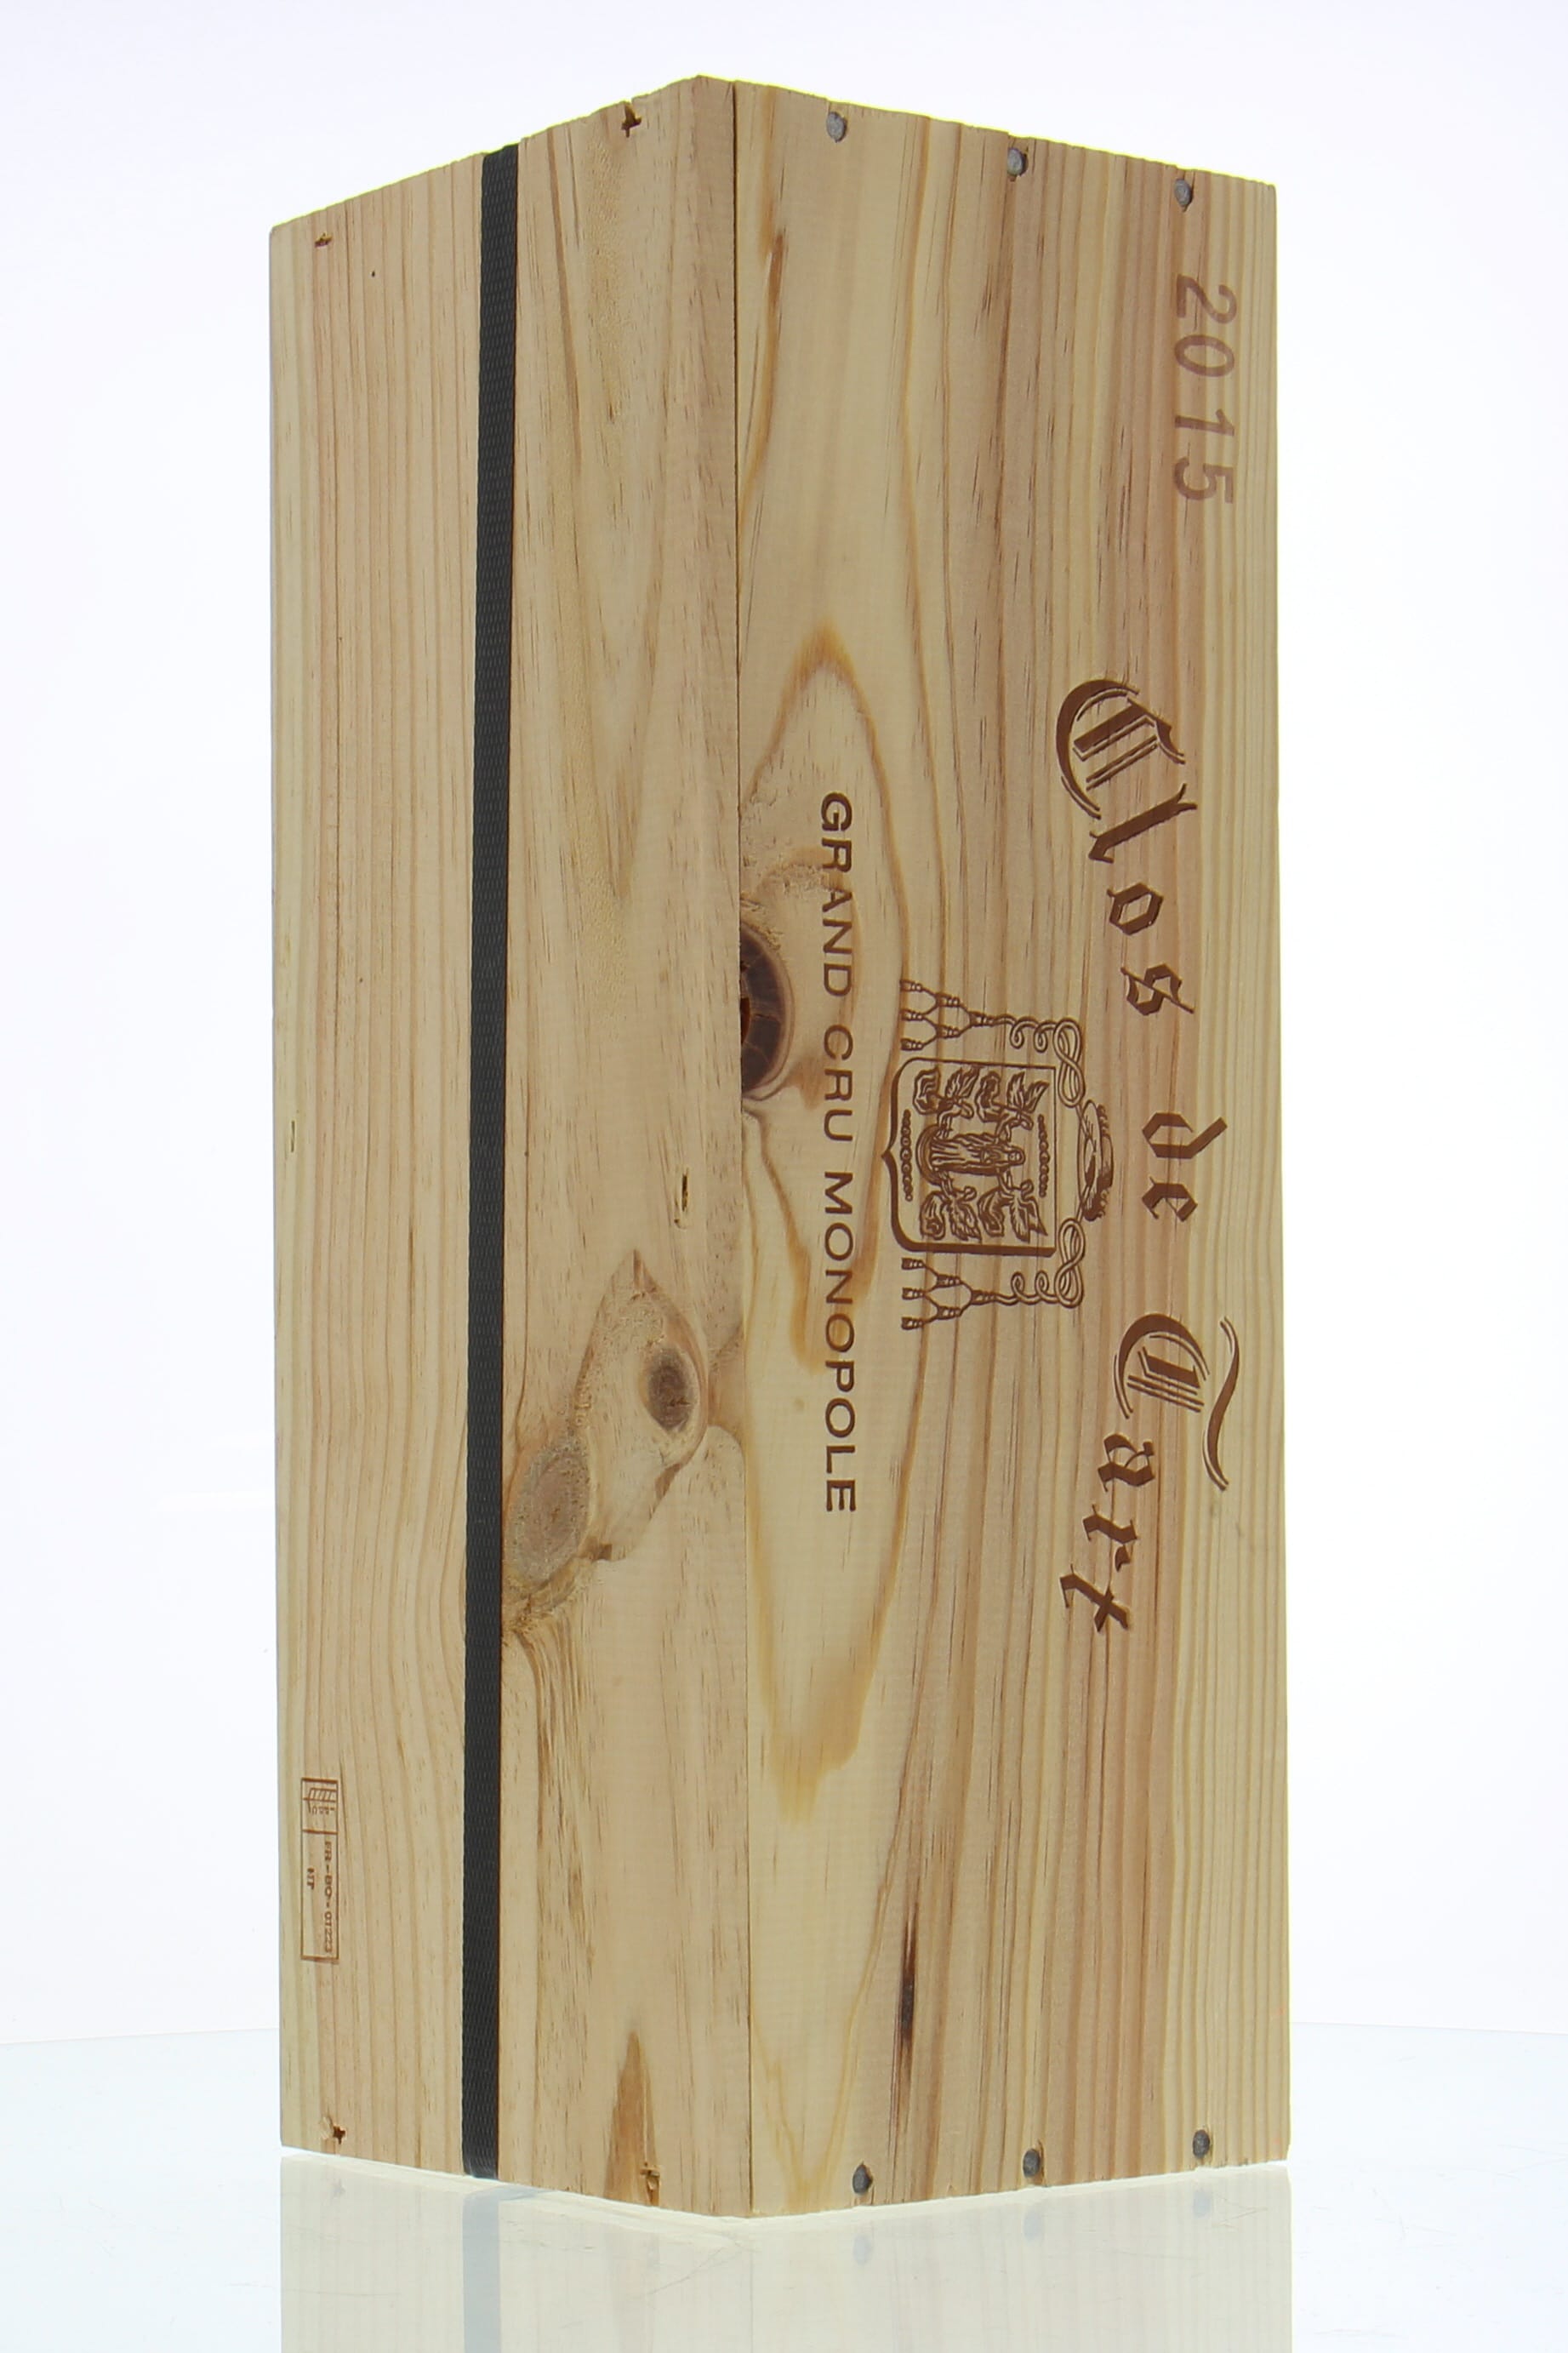 Mommessin - Clos de Tart 2015 From Original Wooden Case